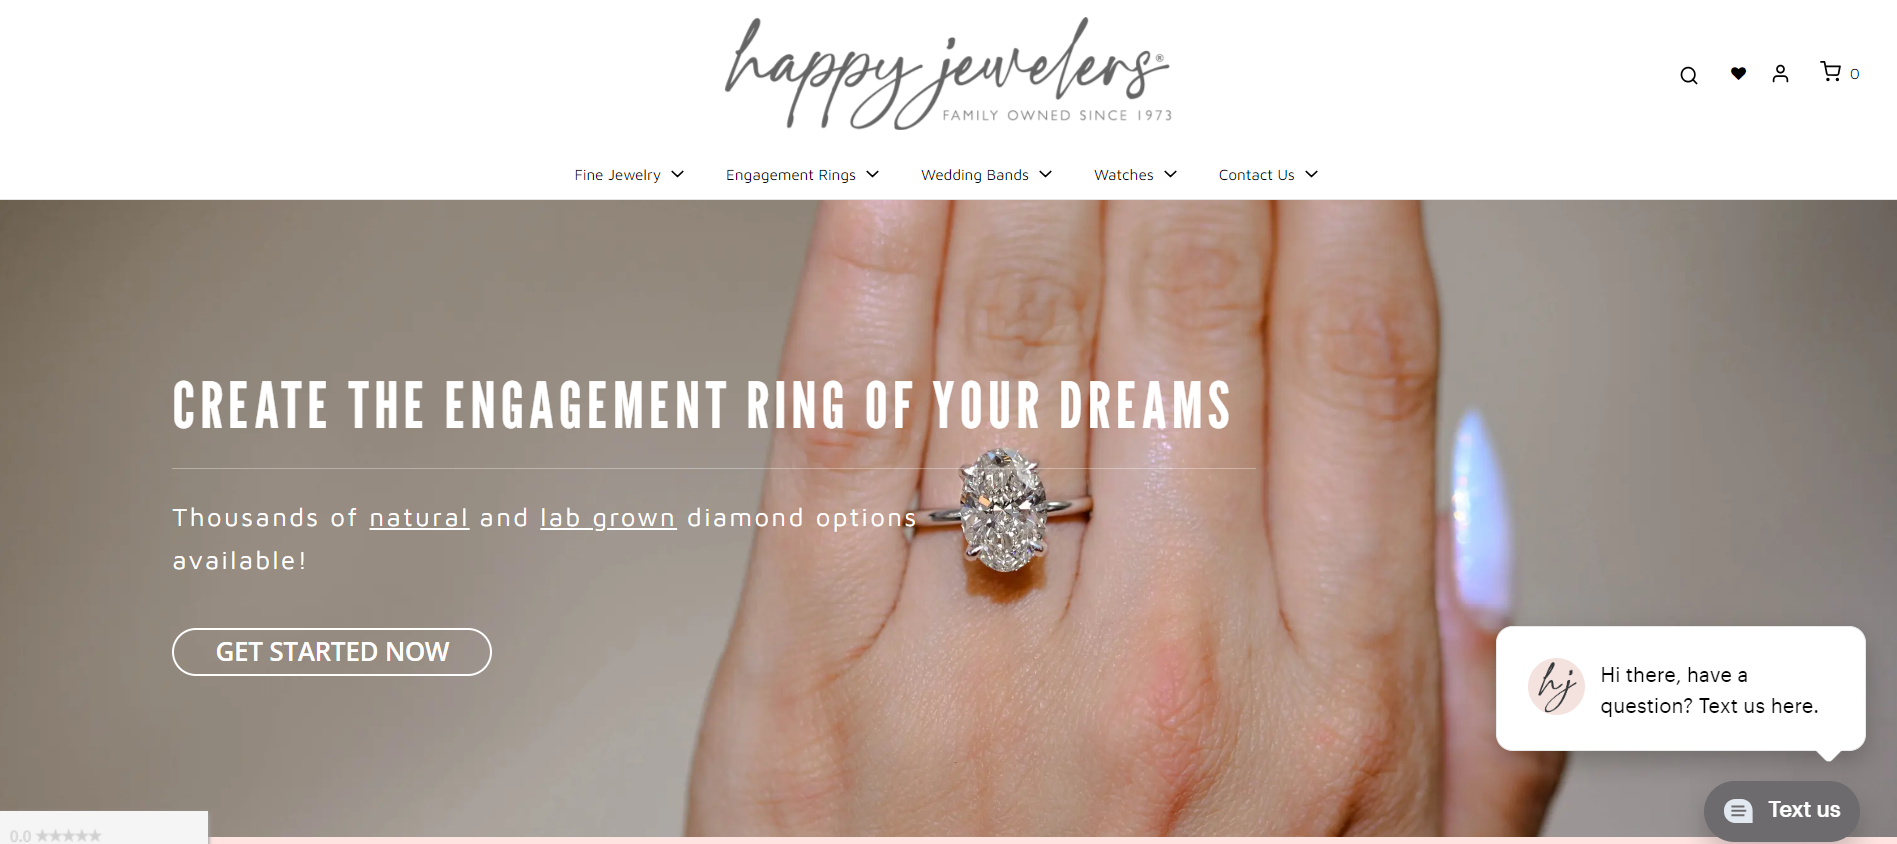 Trang web của Happy Jewelers